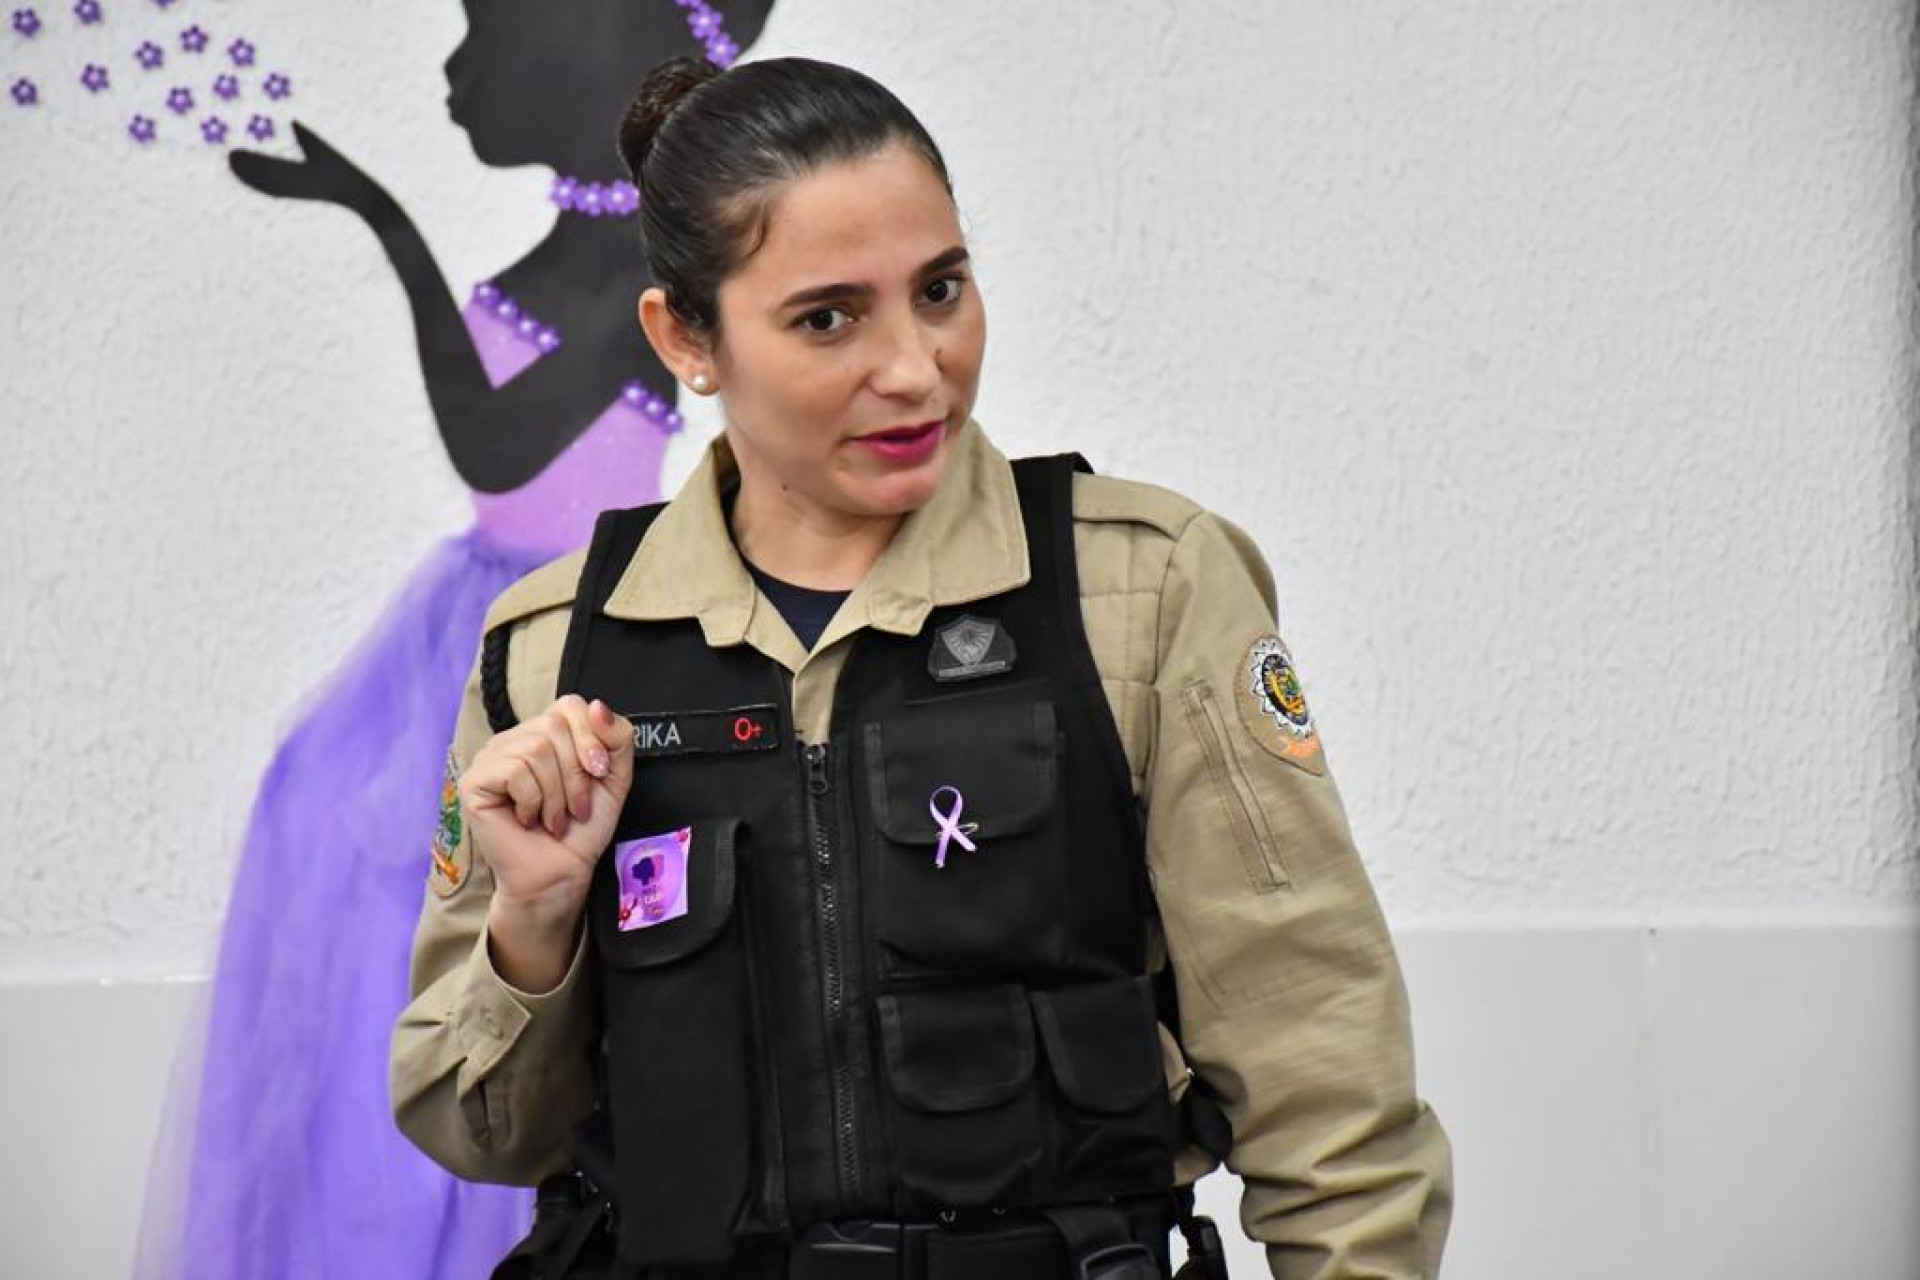 A guarda municipal e palestrante Érica Vieira destacou que a lei protege e resguarda - Jeovani Campos / PMBR